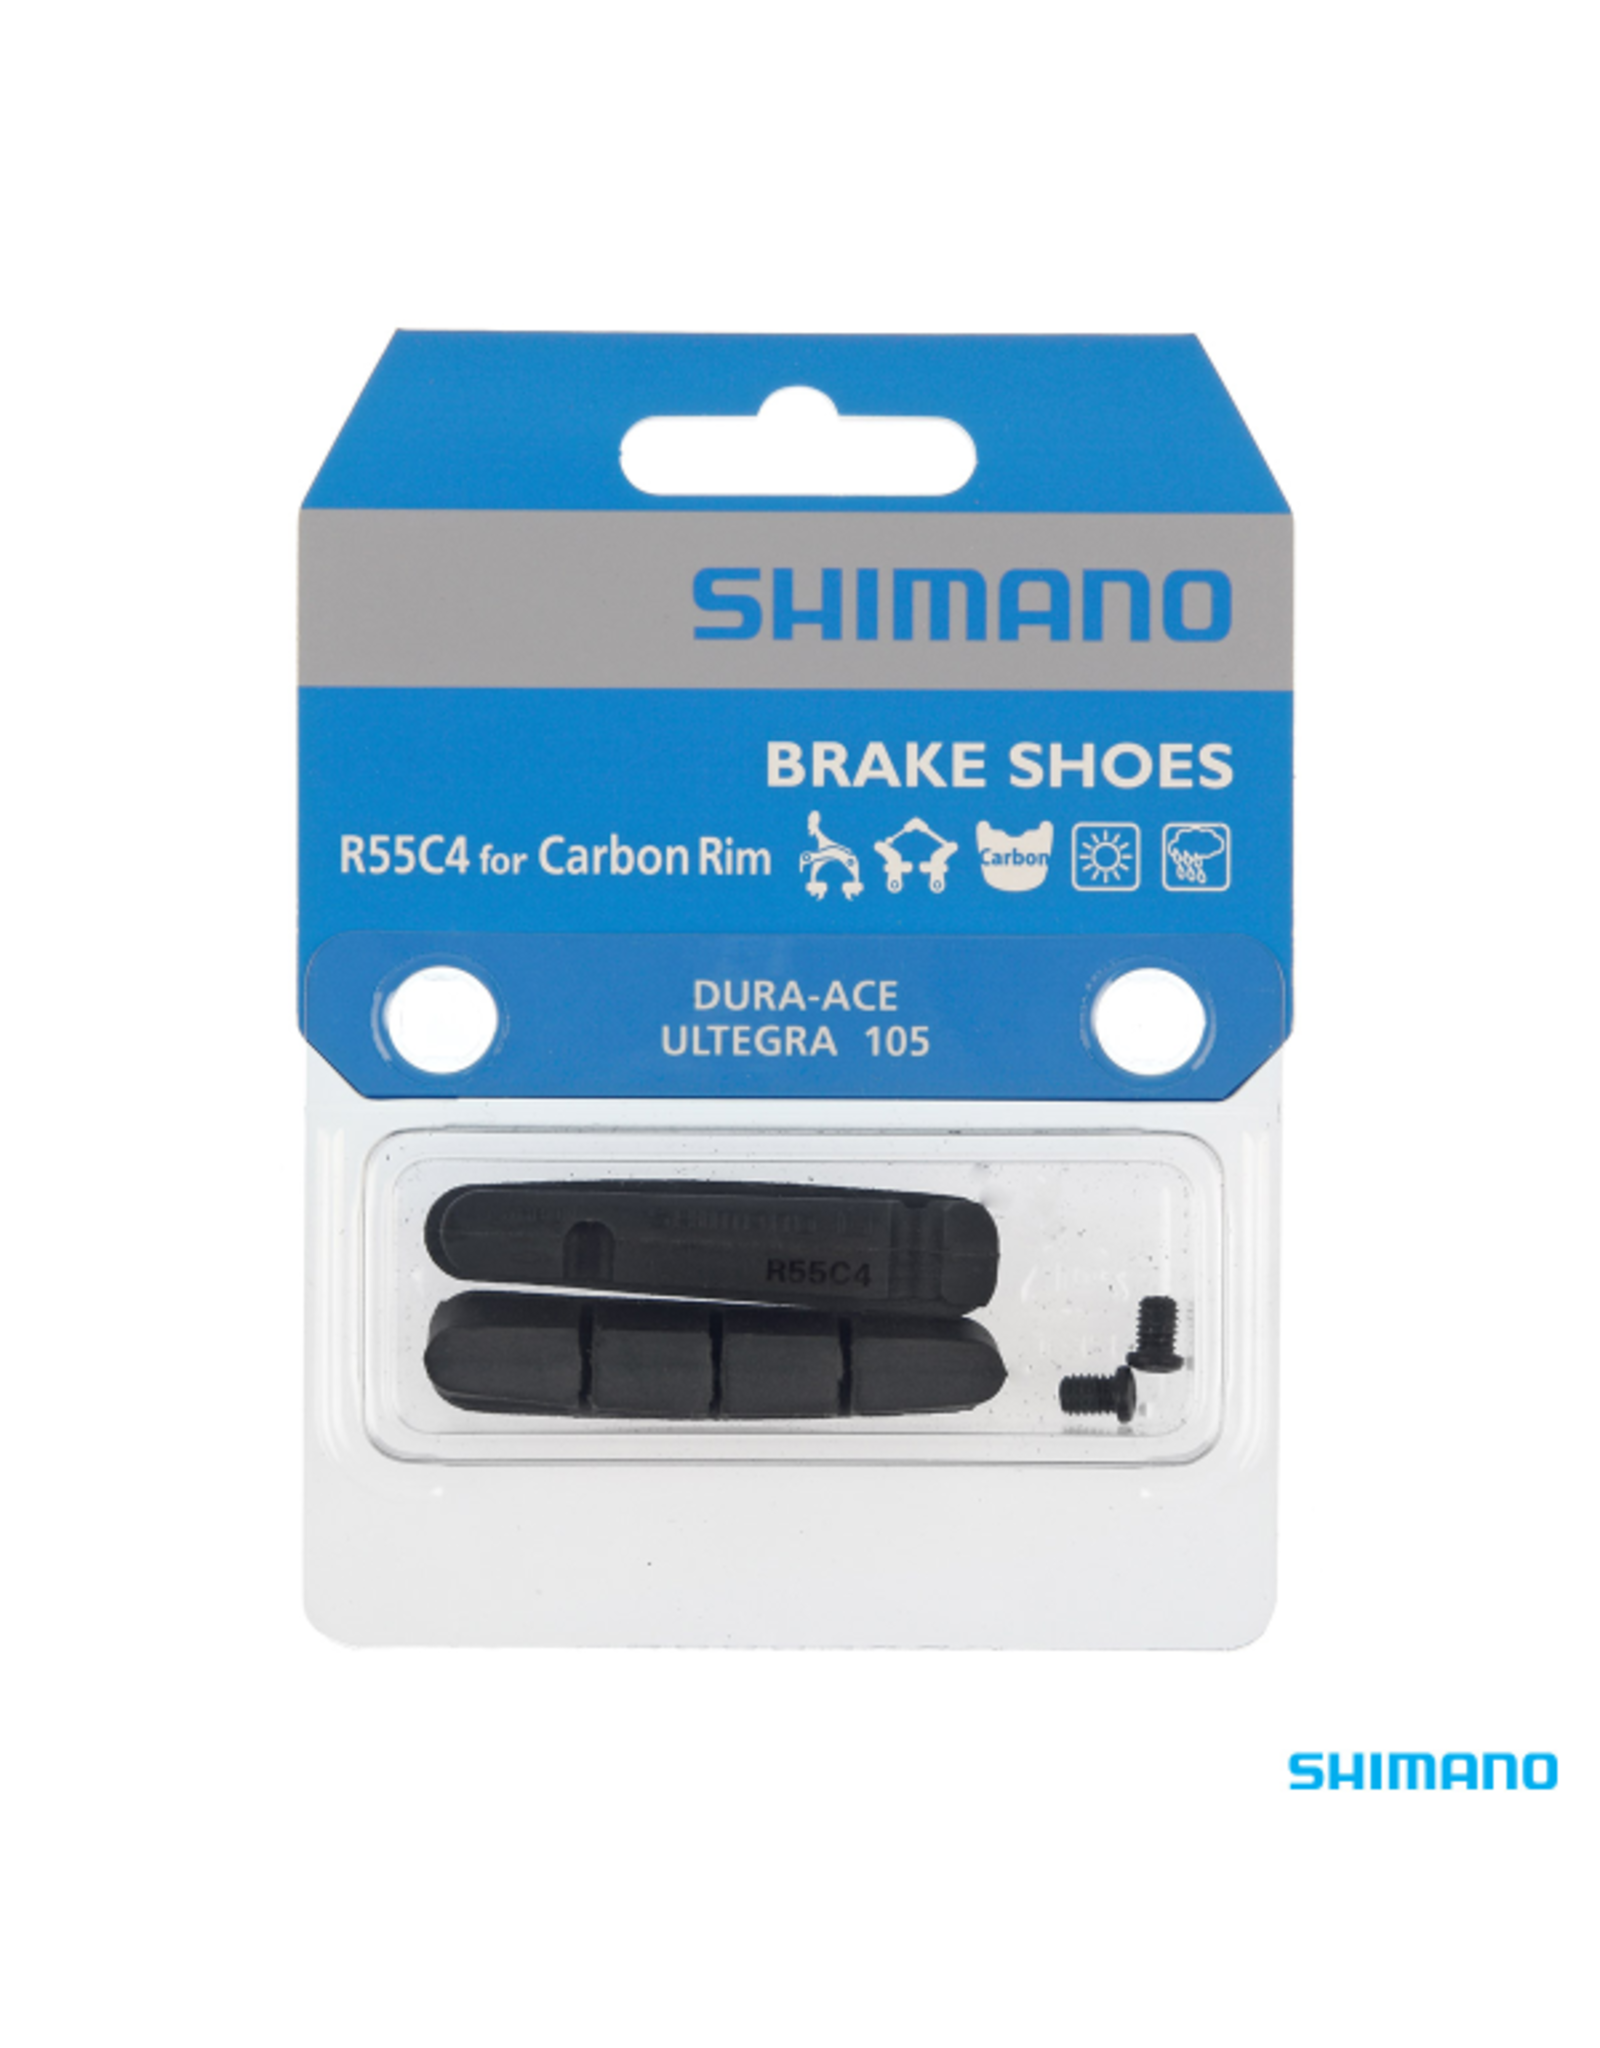 Shimano SHIMANO BR-9000 R55C4 1 PAIR INSERTS CARBON RIM BRAKE PADS